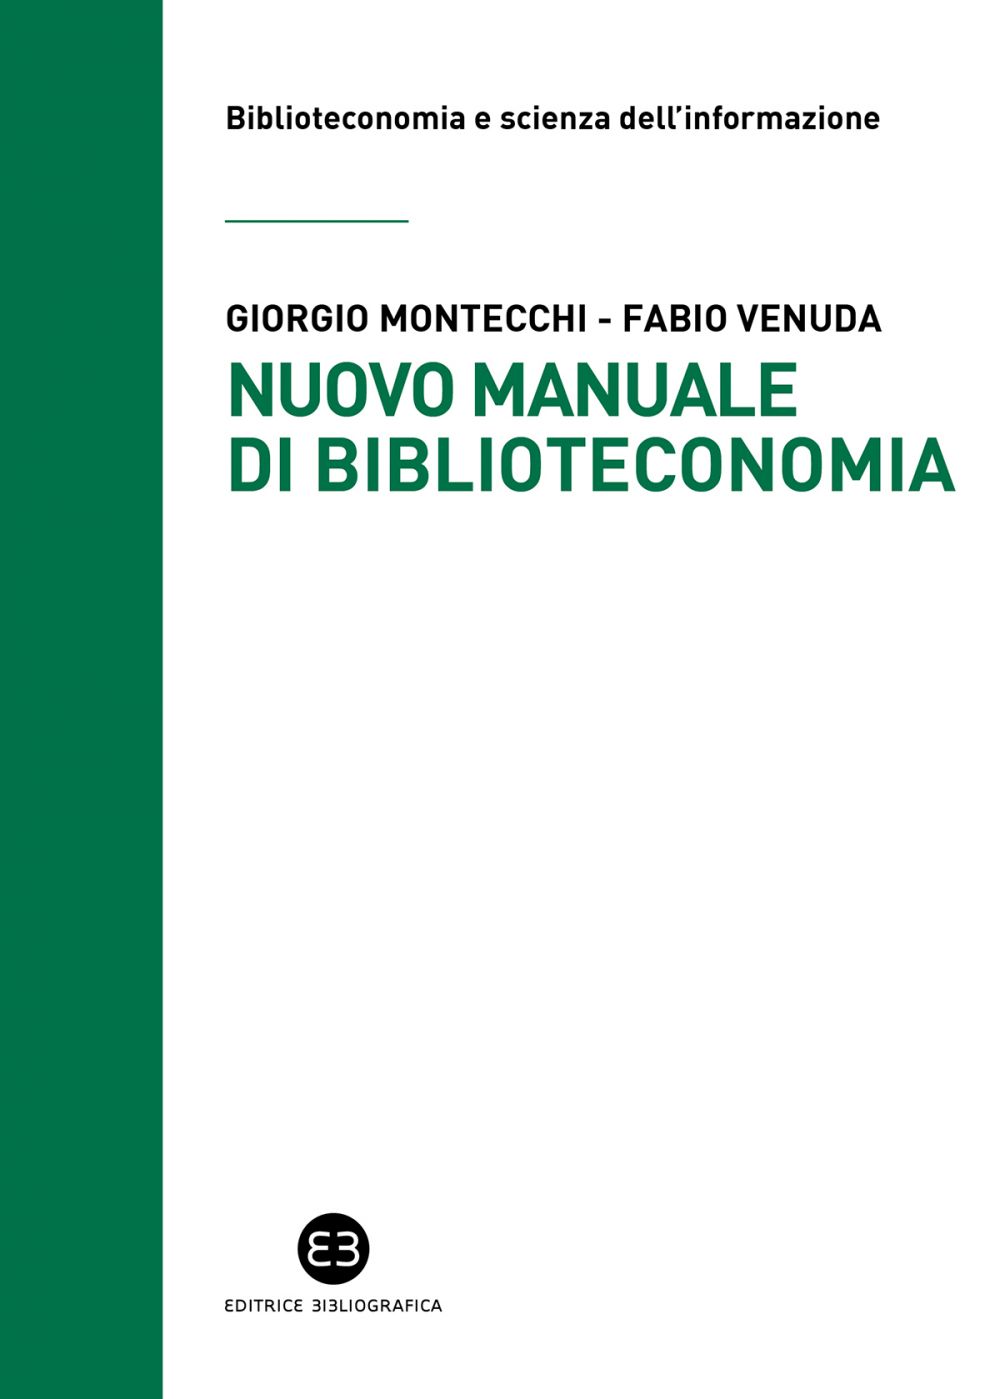 Nuovo manuale di biblioteconomia (EBook, Italian language, 2022, Editrice Bibliografica)